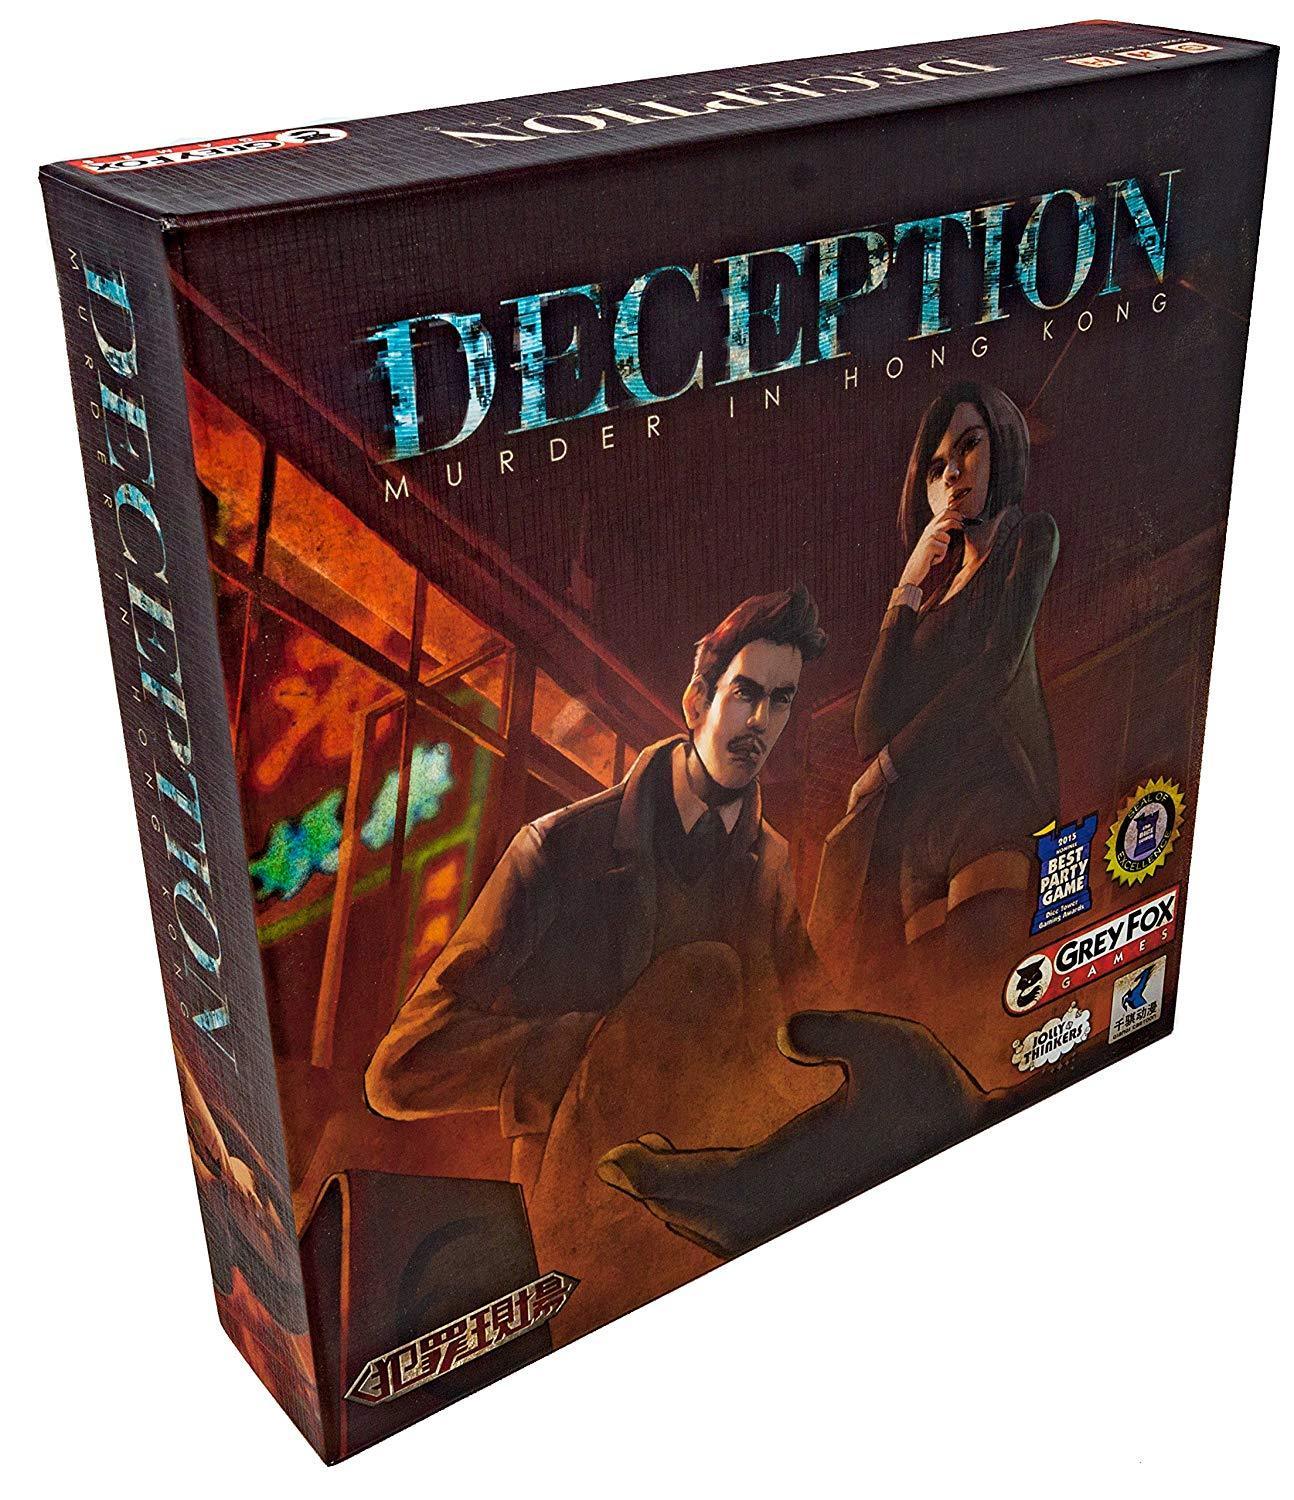 Deception: Murder in Hong Kong (Retail Edition) Retail Card Game Grey Fox Games 0616909967612 KS000723F